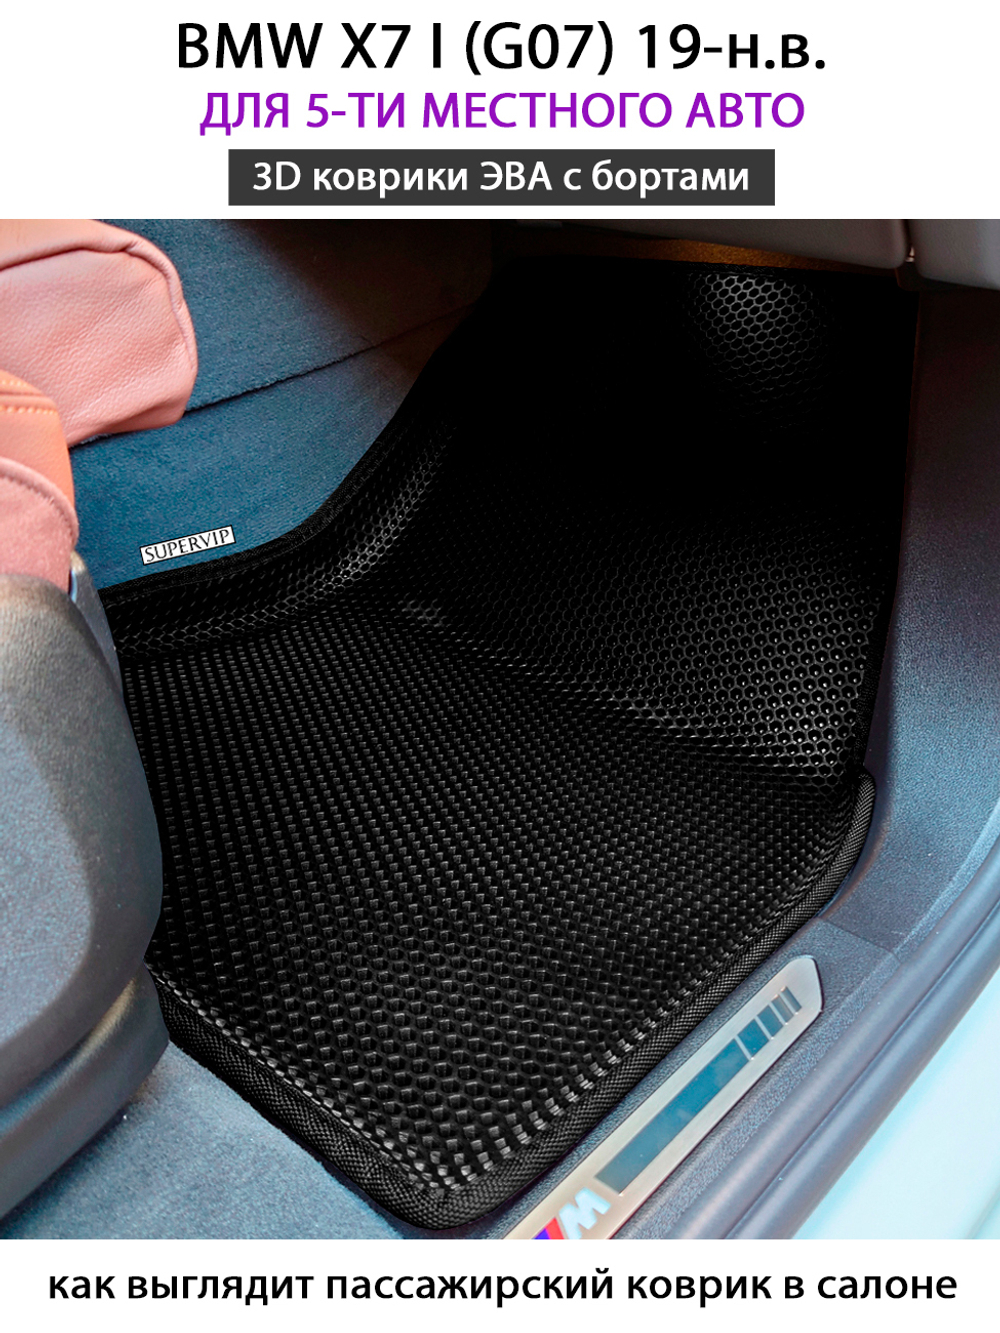 передние eva коврики в салон авто для bmw x7 I g07 от supervip